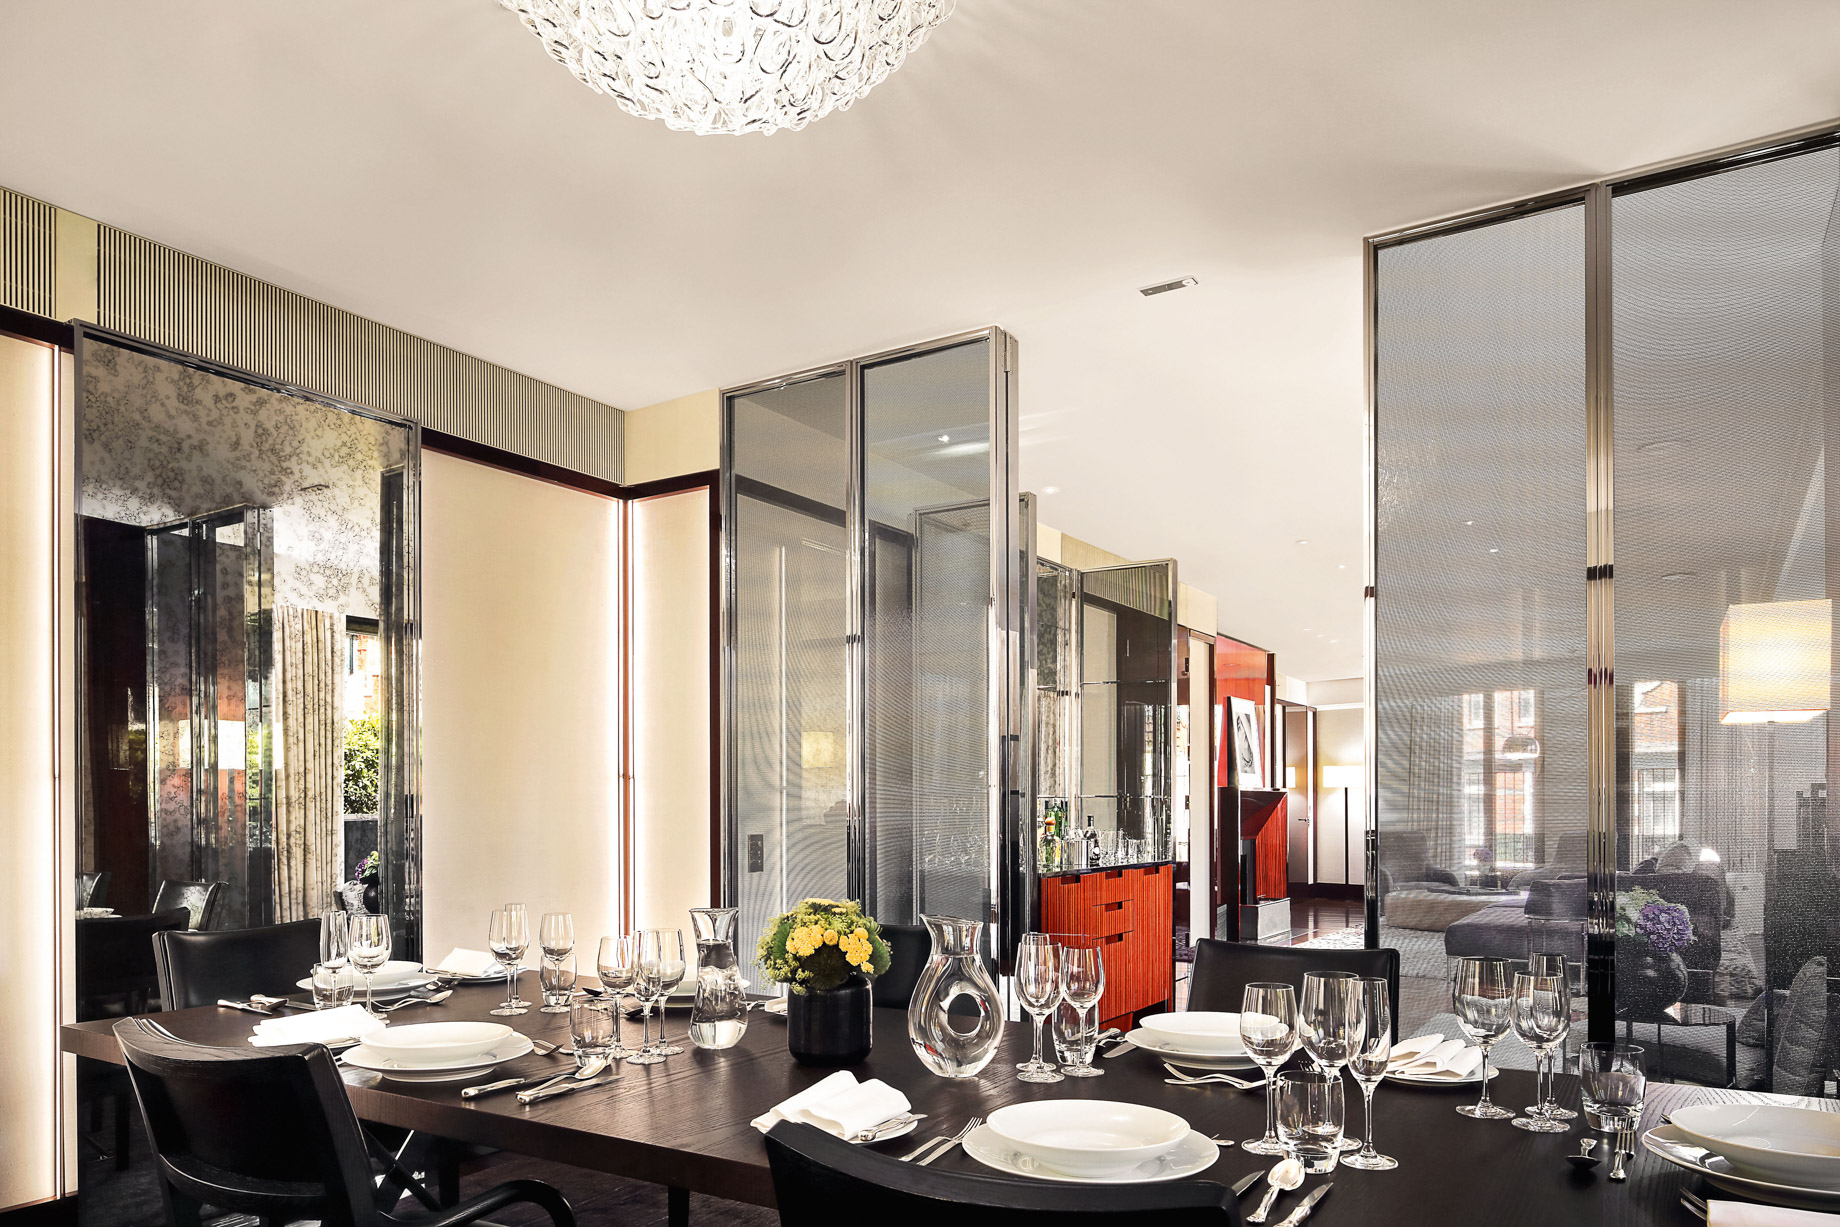 Bvlgari Hotel London – Knightsbridge, London, UK – Bvlgari Suite Dining Room and Living Room